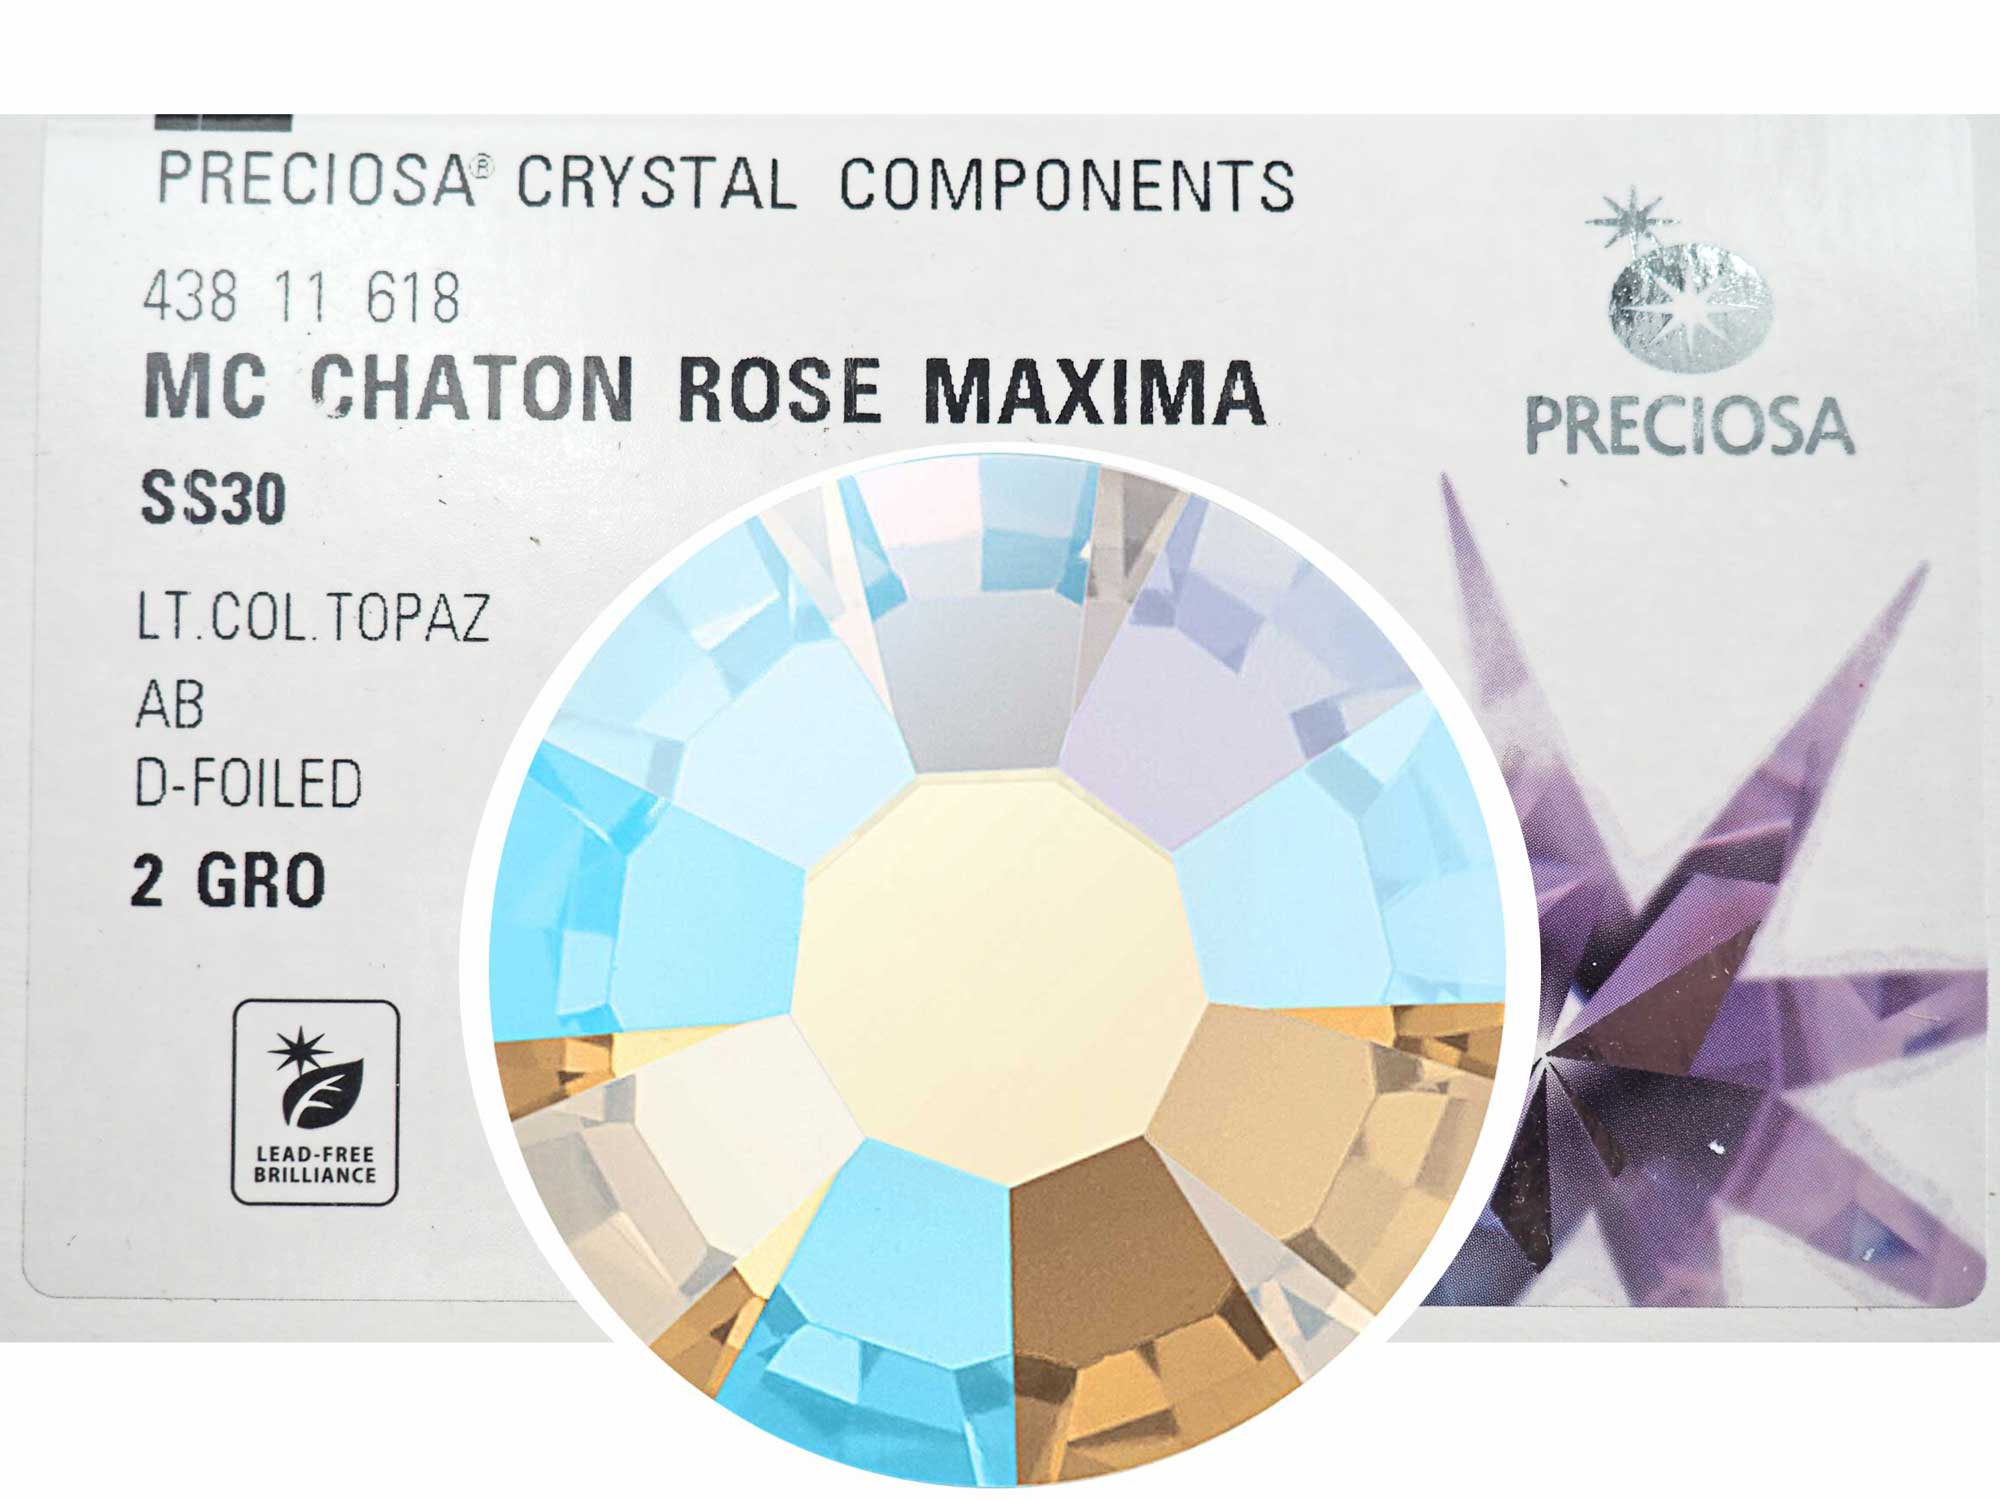 Light Colorado Topaz AB, Preciosa VIVA or MAXIMA Chaton Roses (Rhinestone Flatbacks), Genuine Czech Crystals, light brown coated with Aurora Borealis